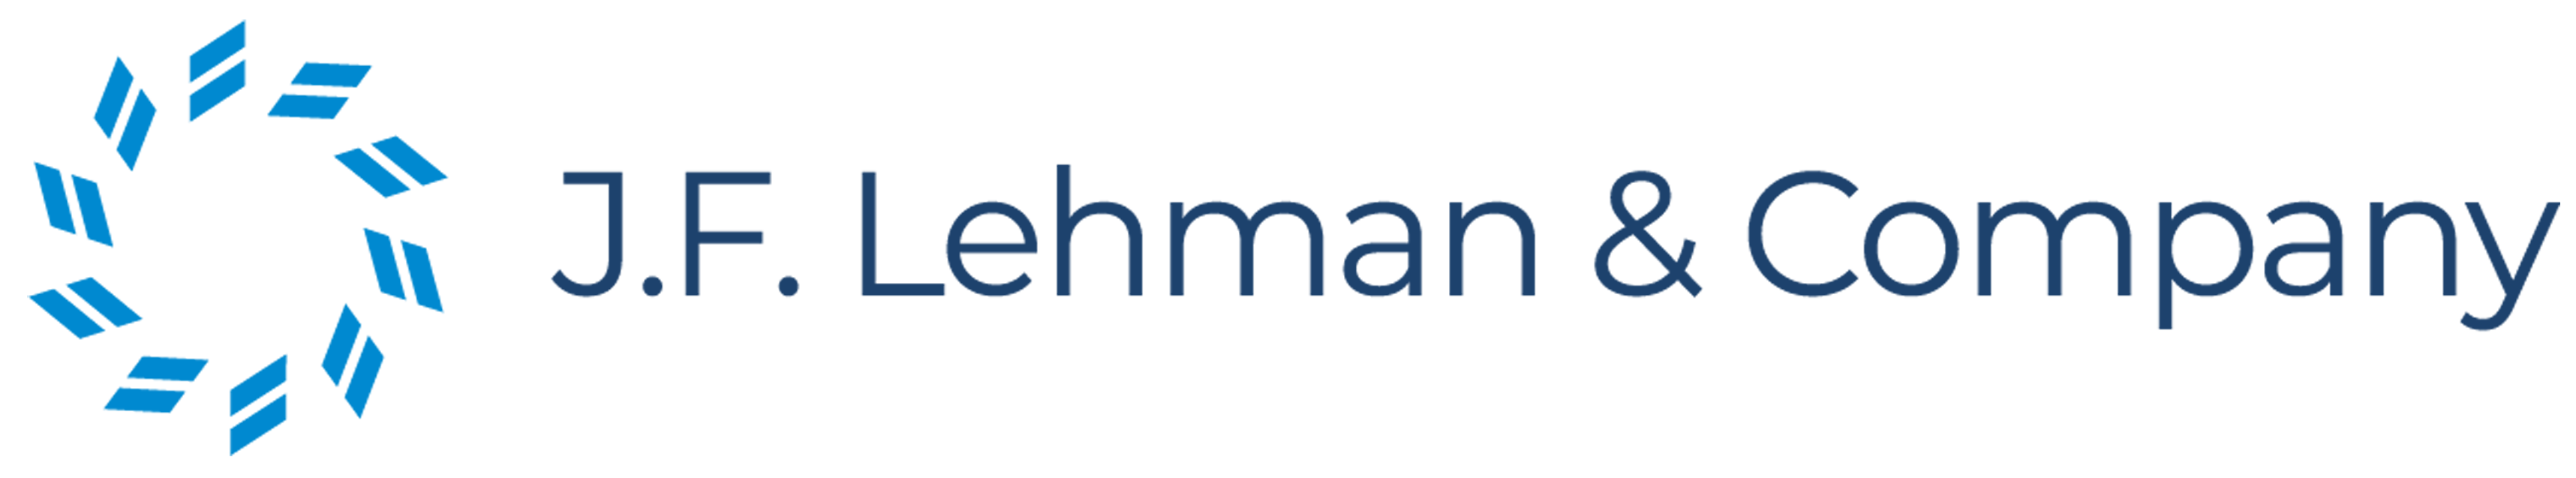 J.F. Lehman & Company Announces New Hires, September 29 2006